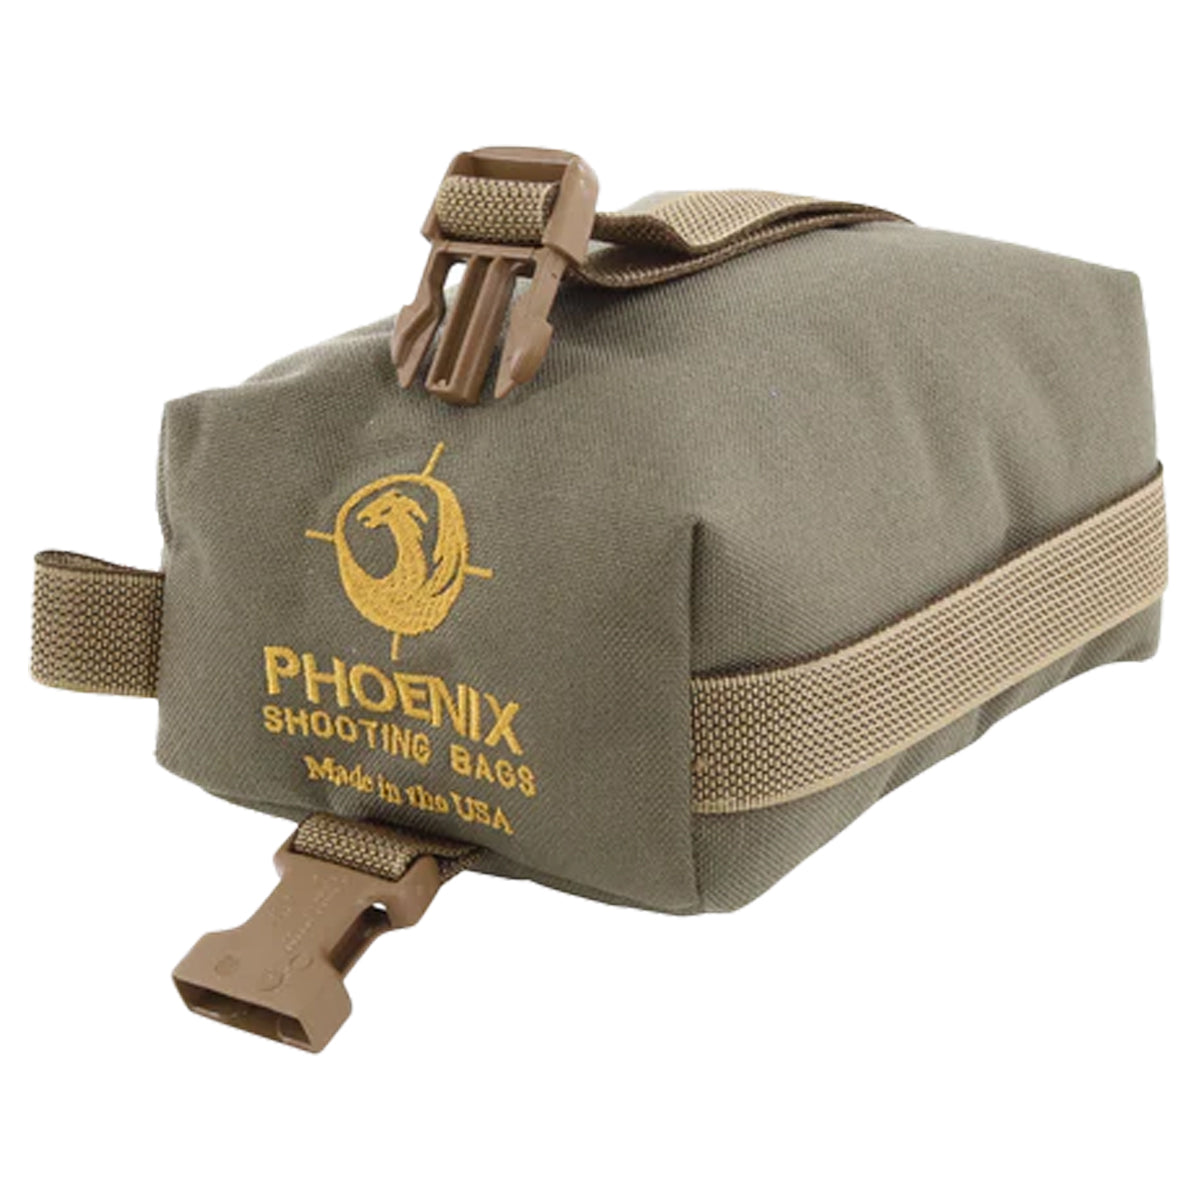 Phoenix Shooting Bags X-Small Rear Bag in Ranger Green by GOHUNT | Phoenix Shooting Bags - GOHUNT Shop